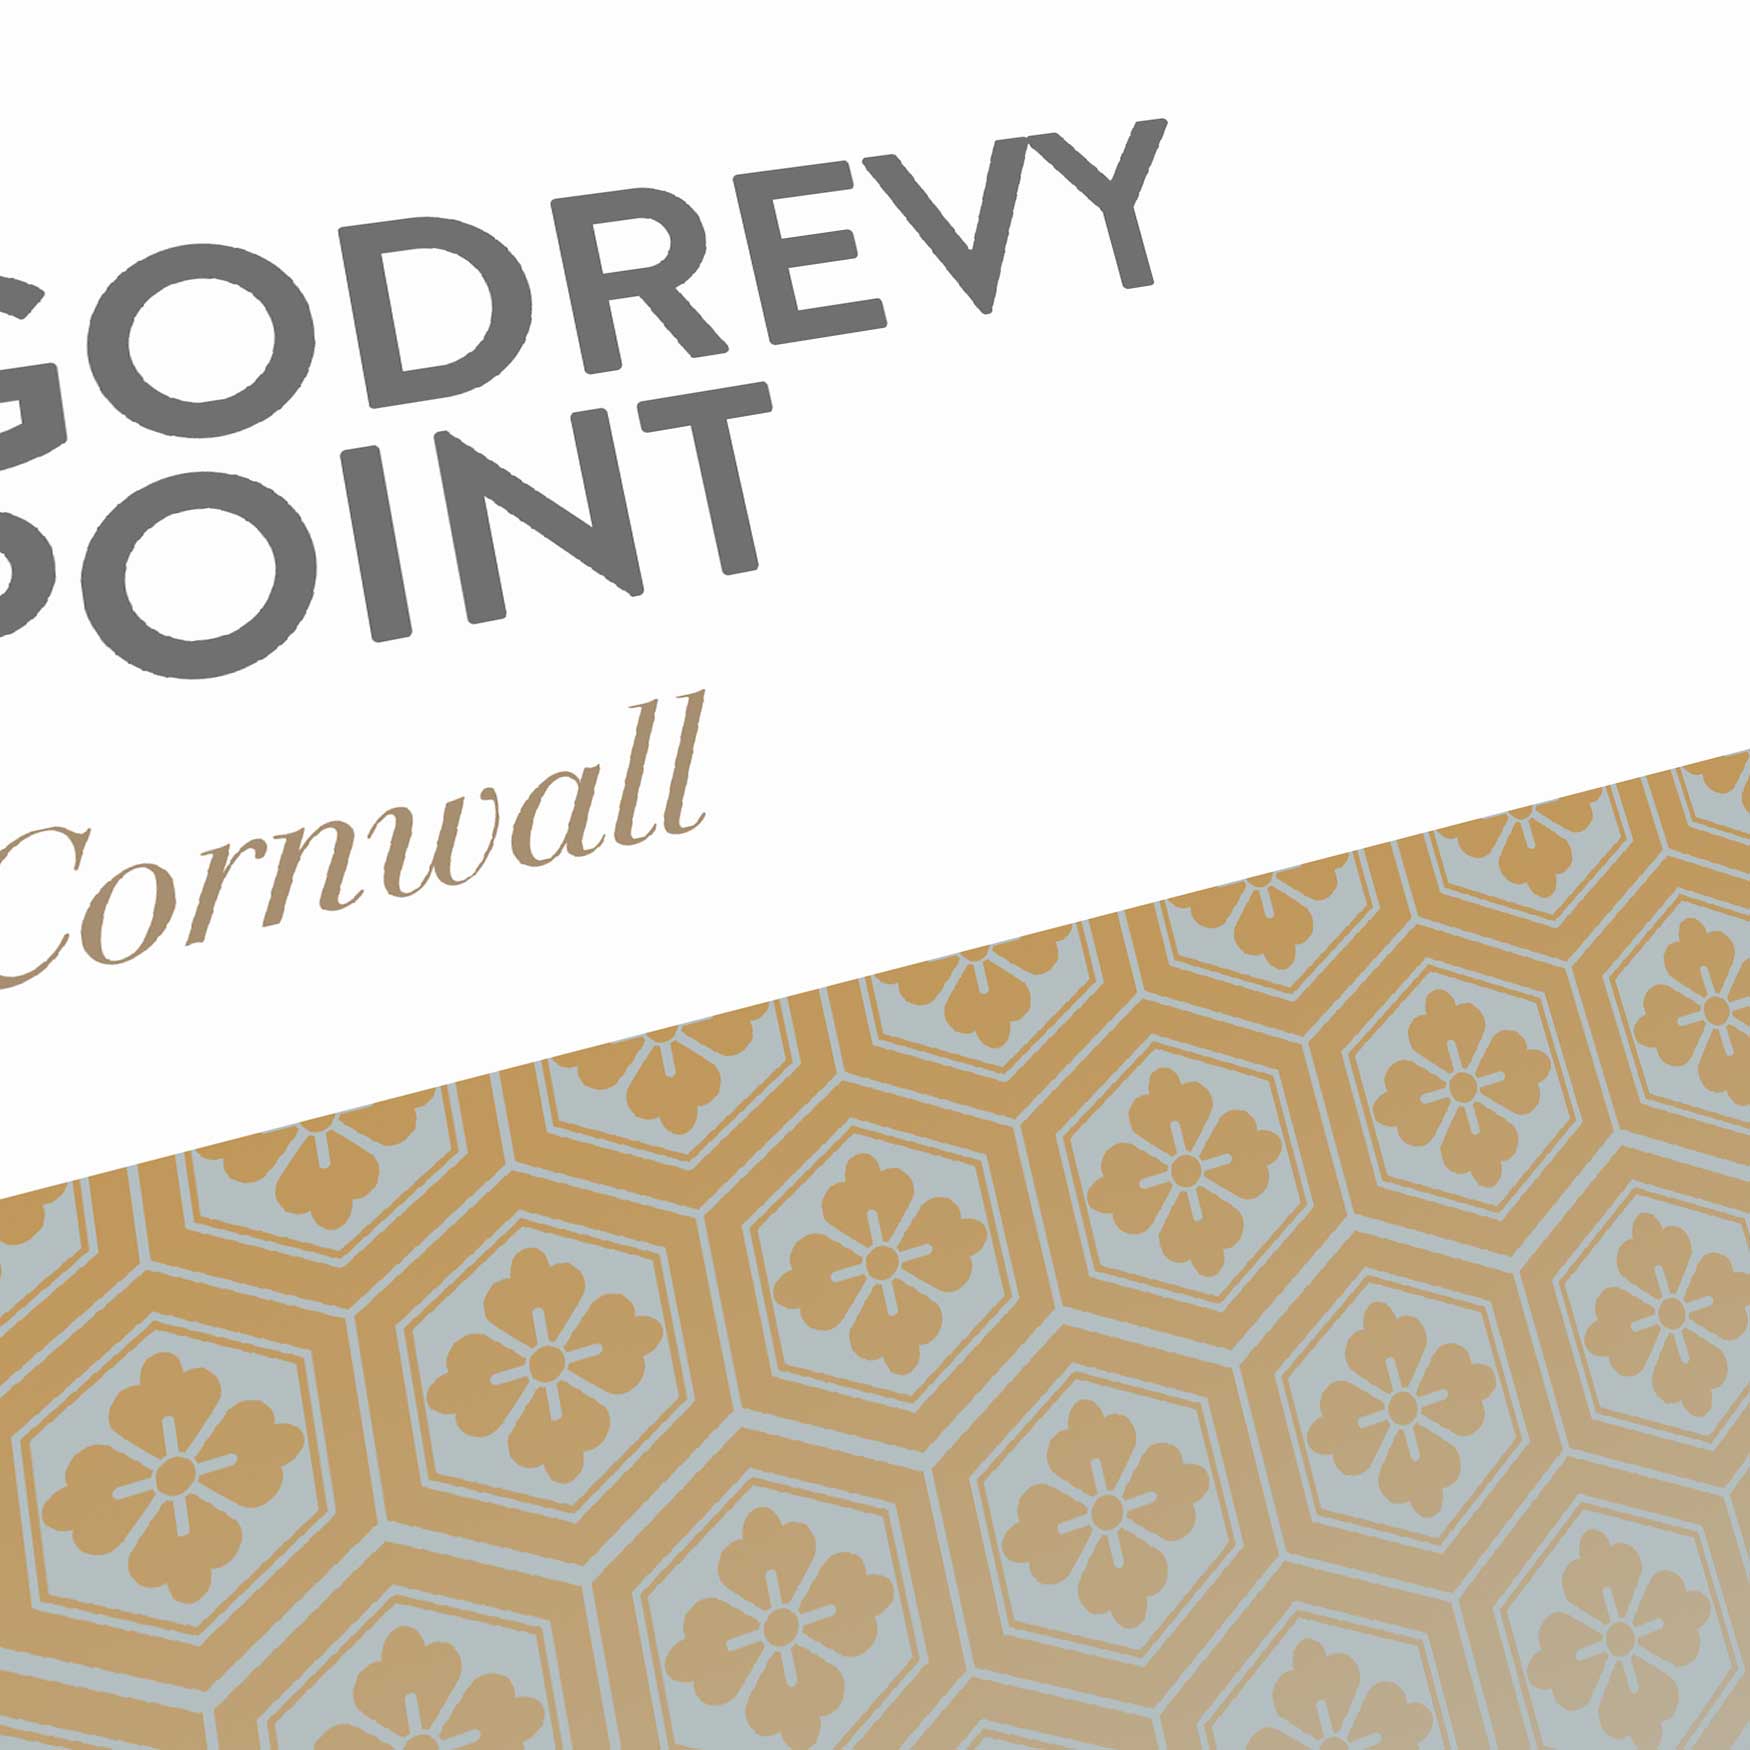 Godrevy point, Cornwall Kernow abstract coastal poster print